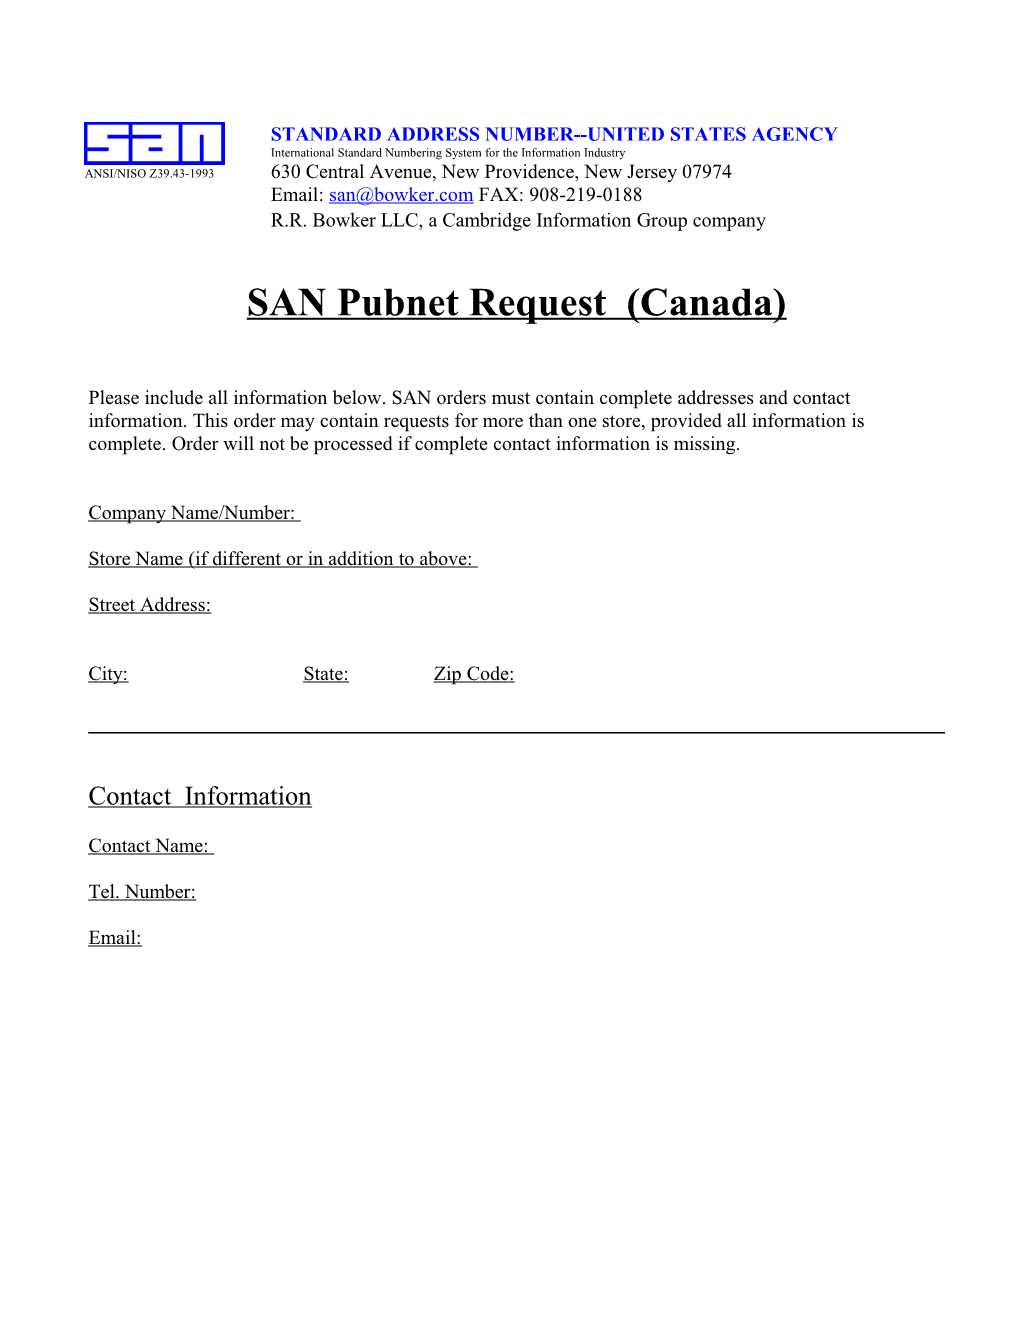 SAN Pubnet Request (Canada)